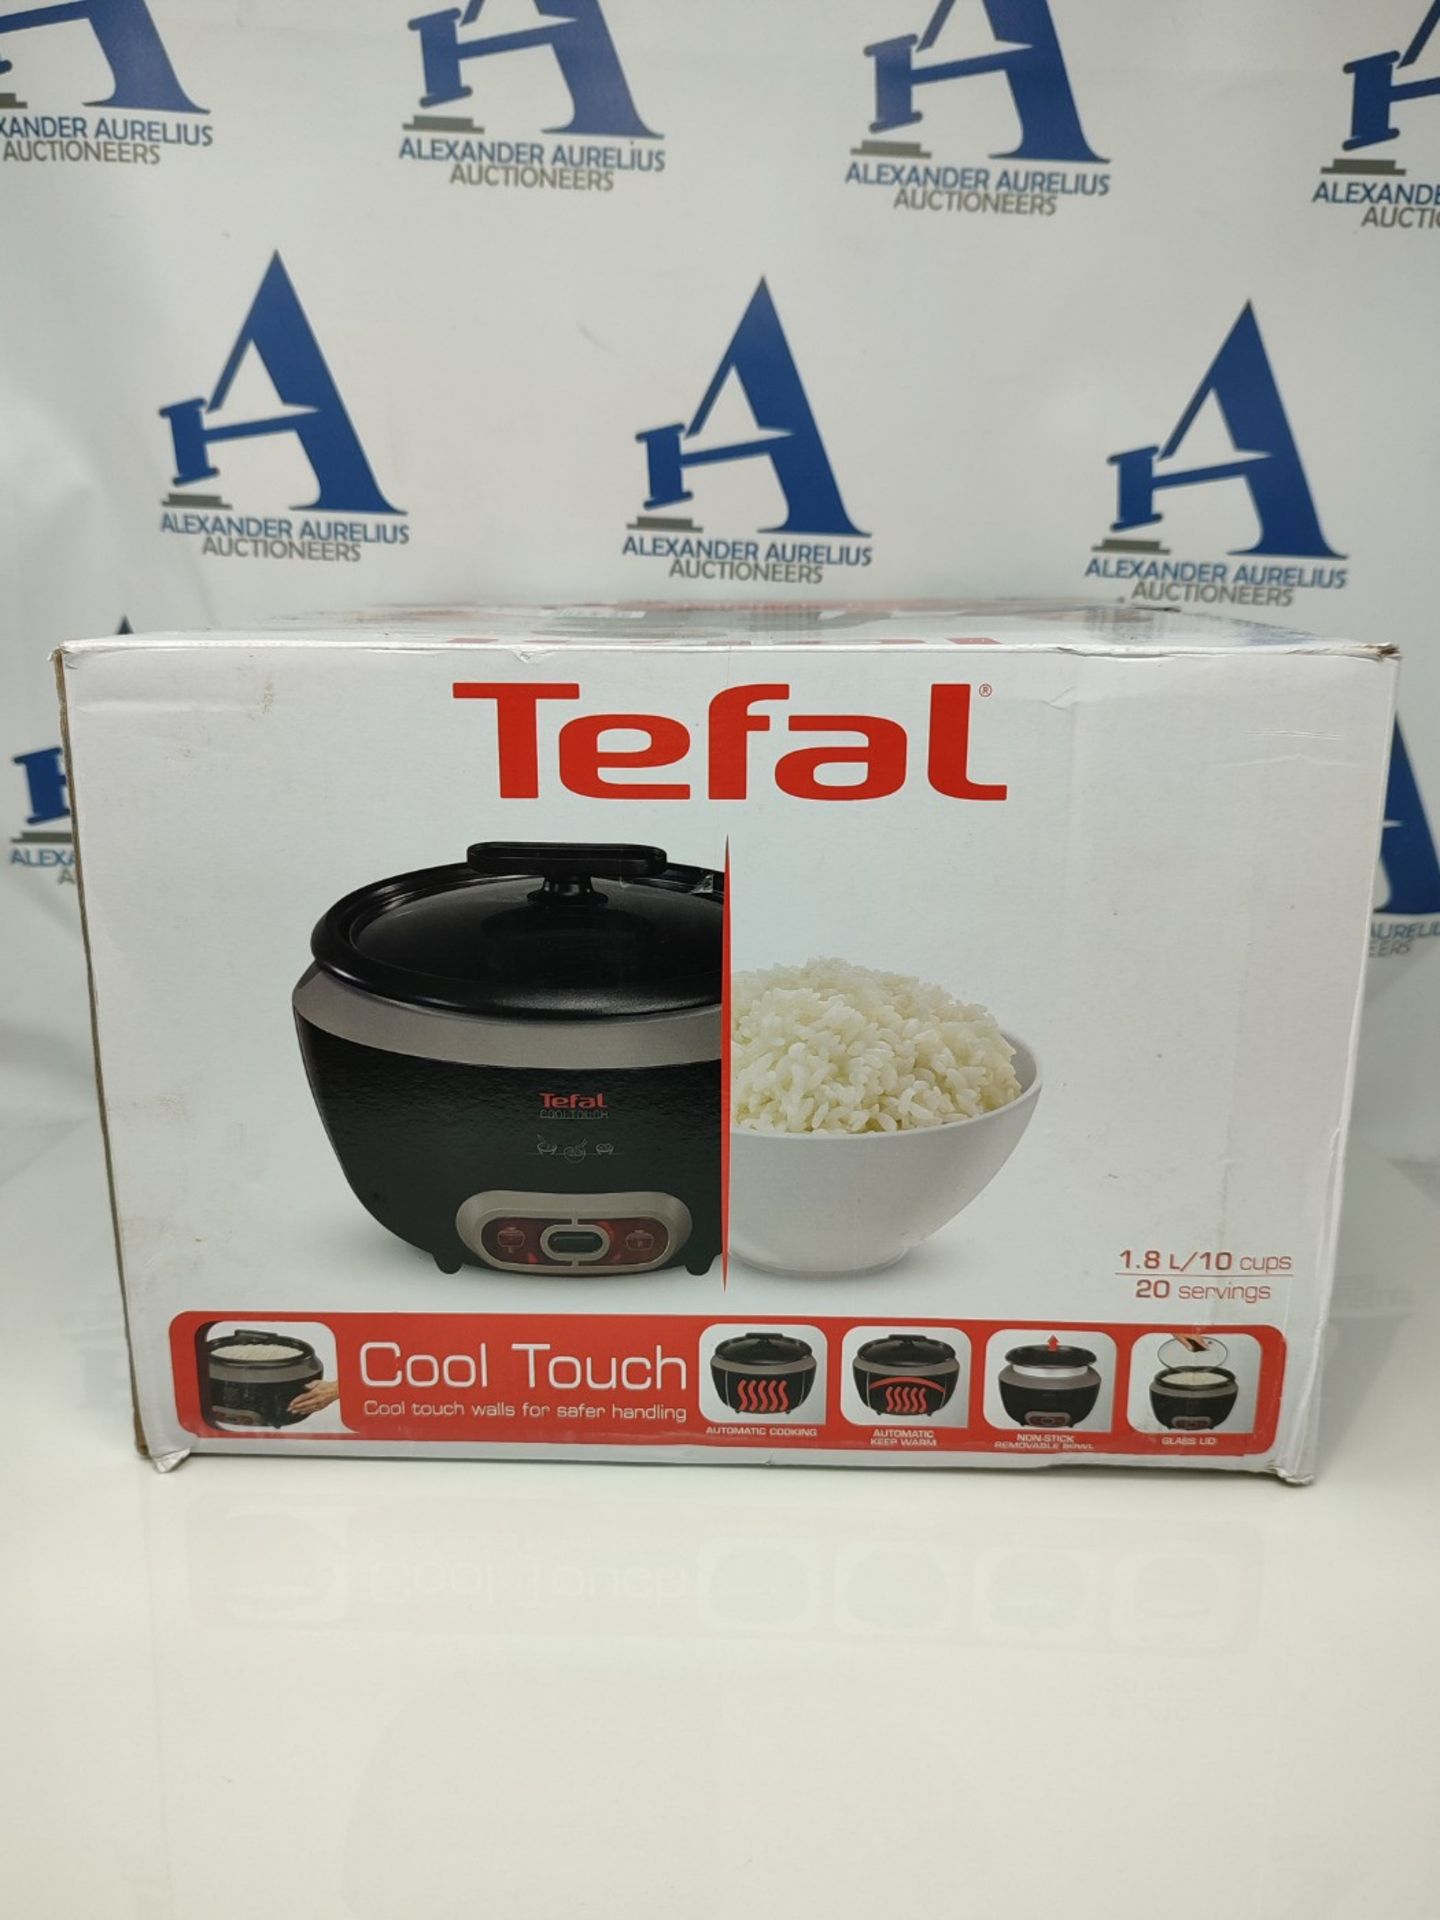 Tefal RK1568UK Cool Touch Rice Cooker, (20 Portions), 700 W, 1.8 Litre, Black - Bild 2 aus 3